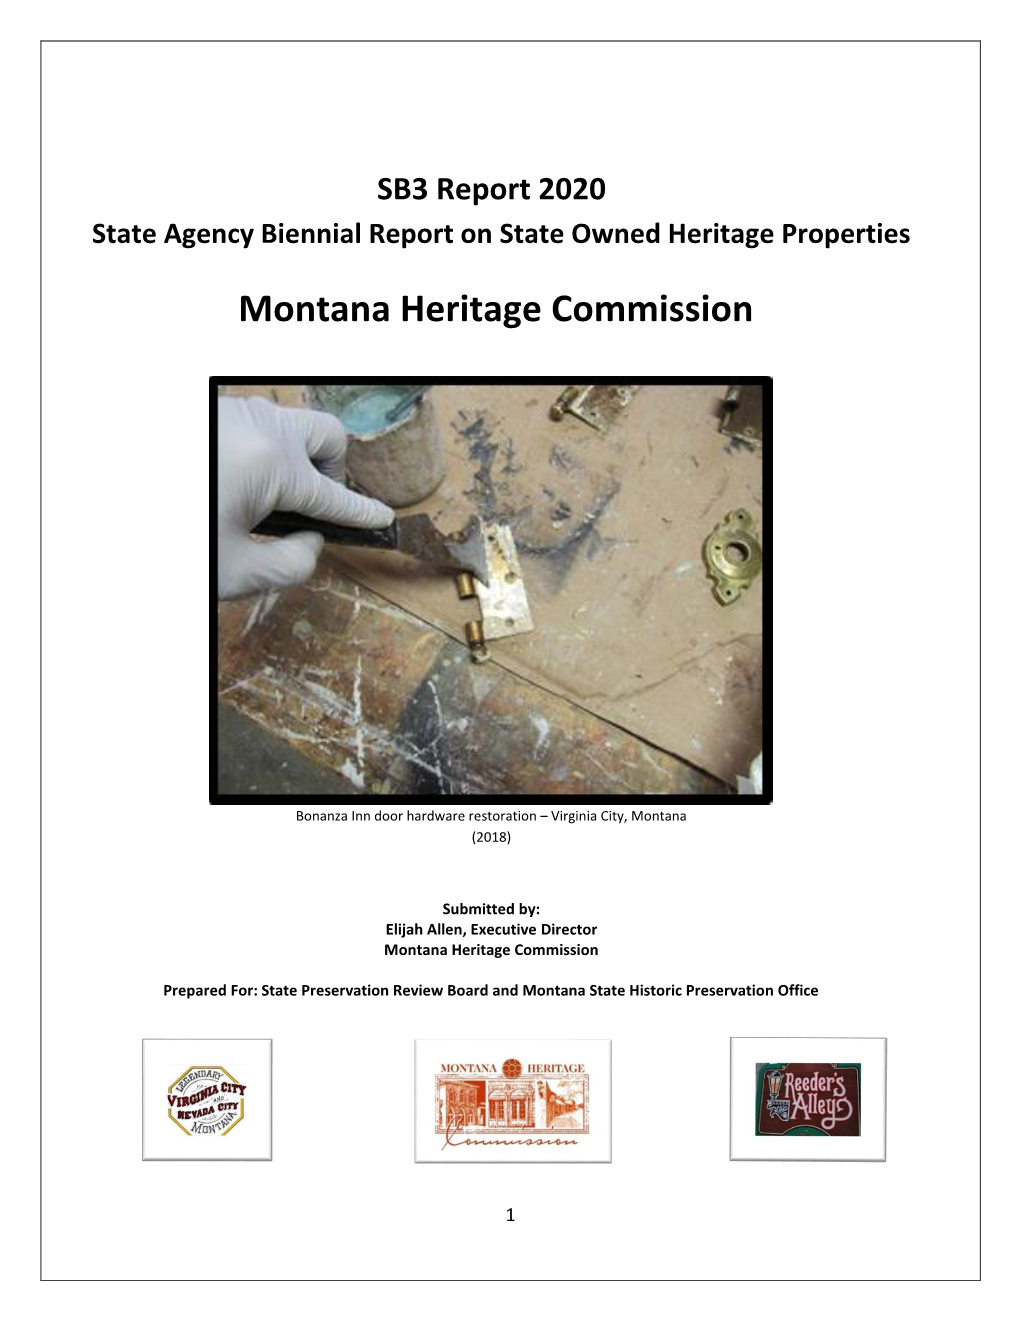 Montana Heritage Commission